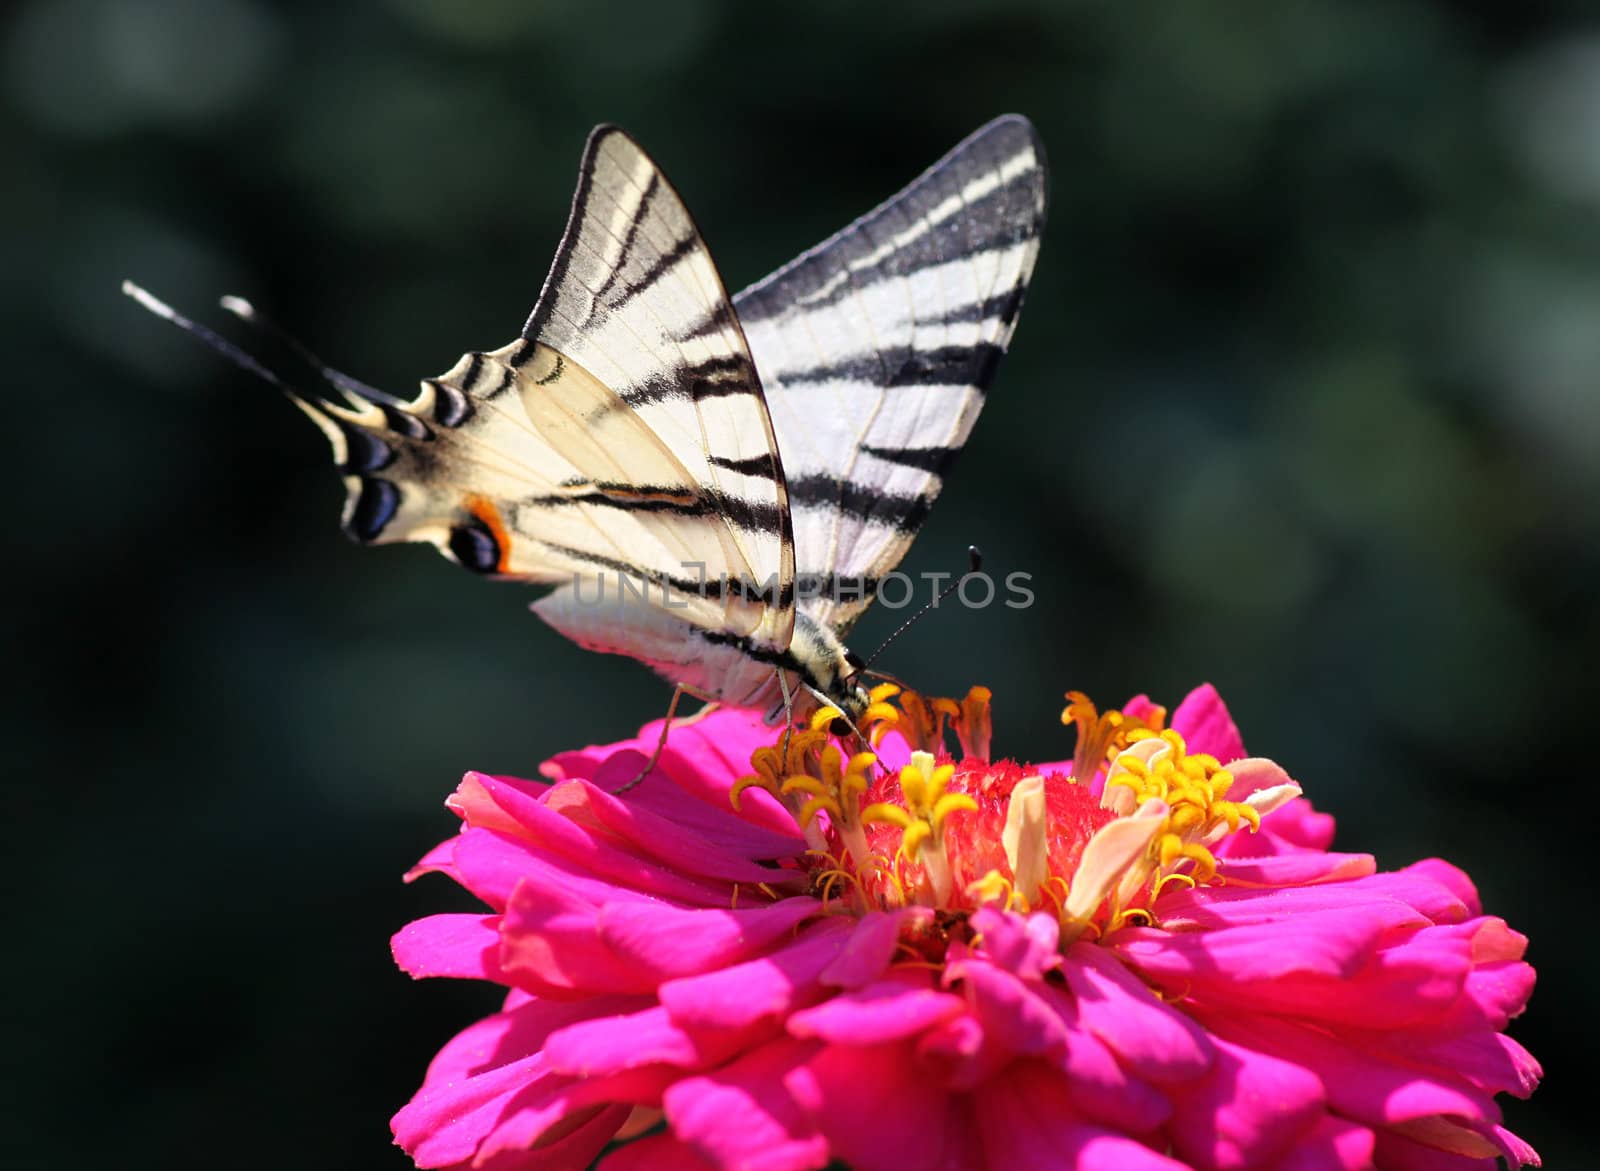 Scarce Swallowtail butterfly by romantiche